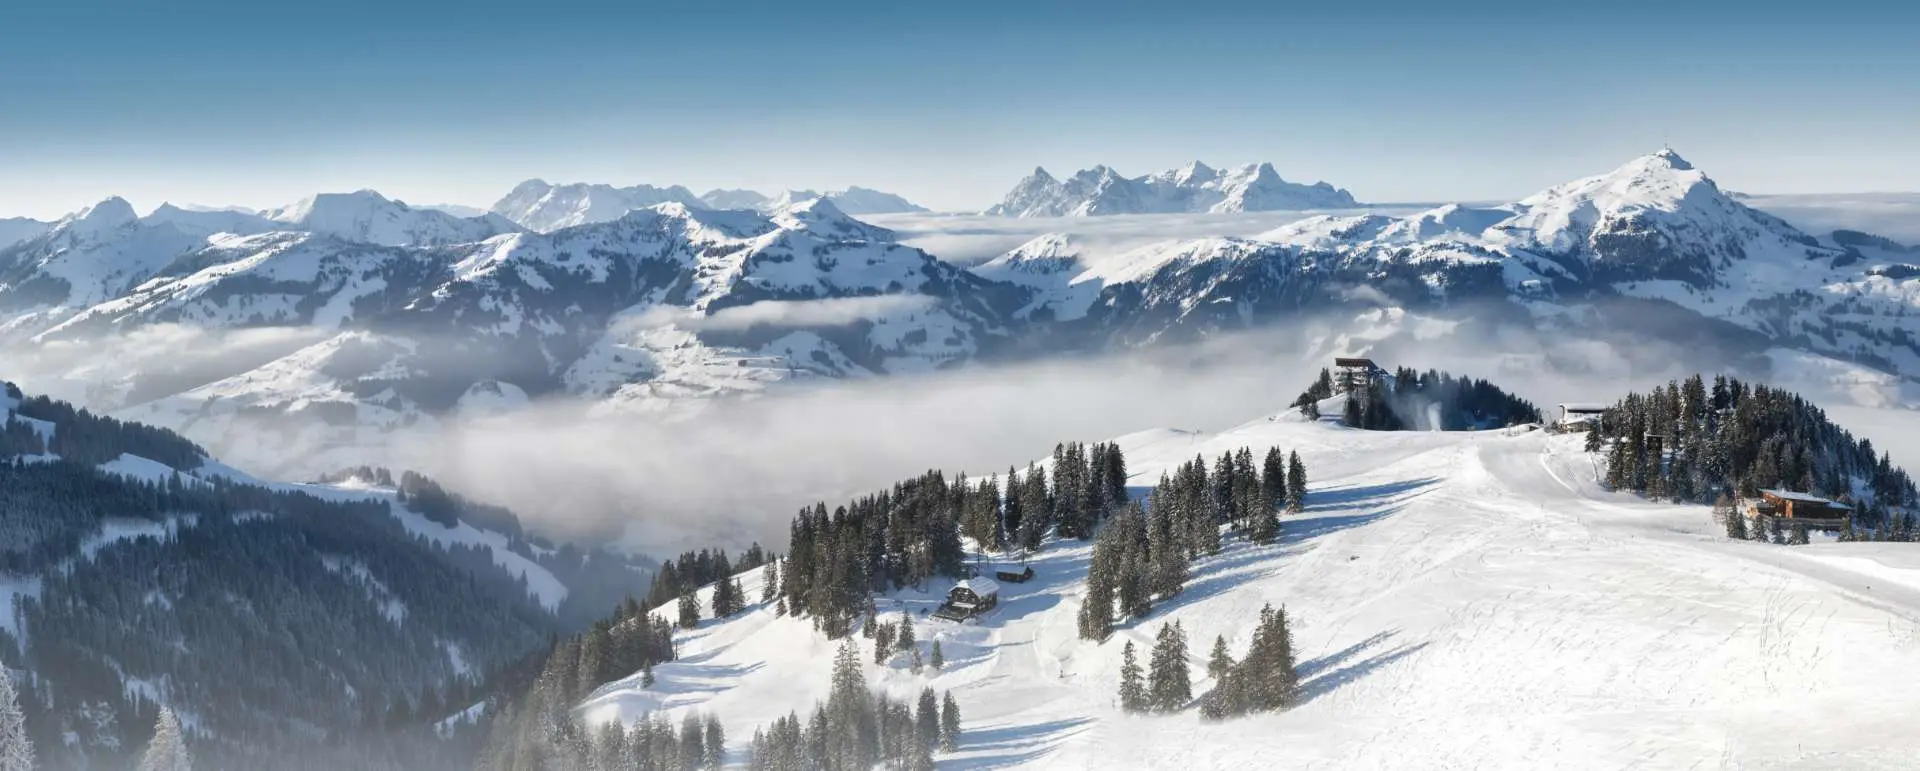 Kitzbühel Alps - the destination for groups